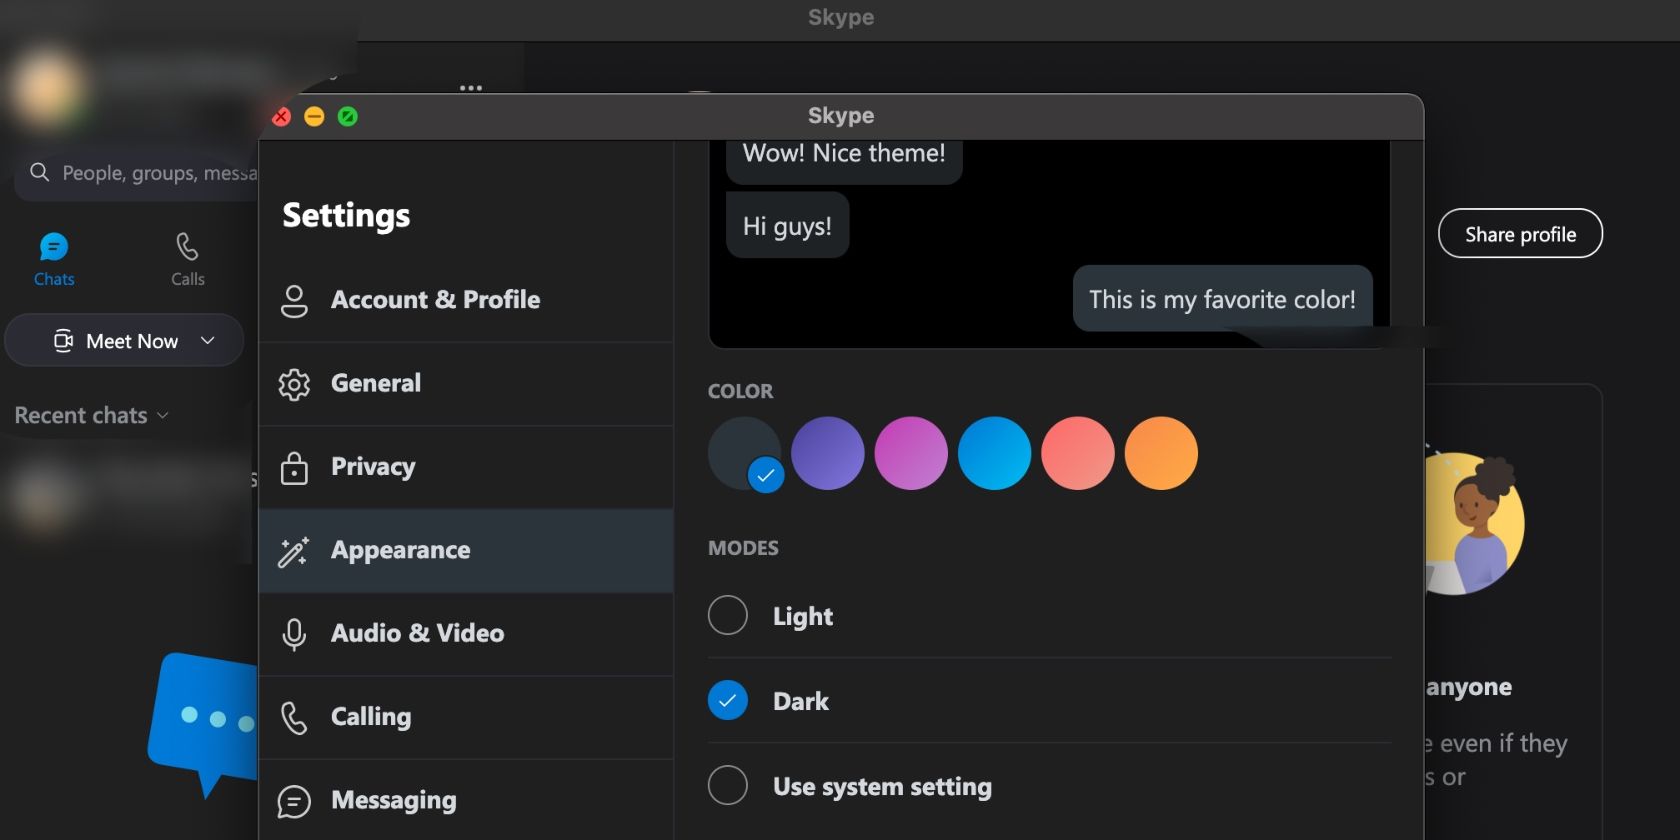 screenshot of skype appearance settings on computer